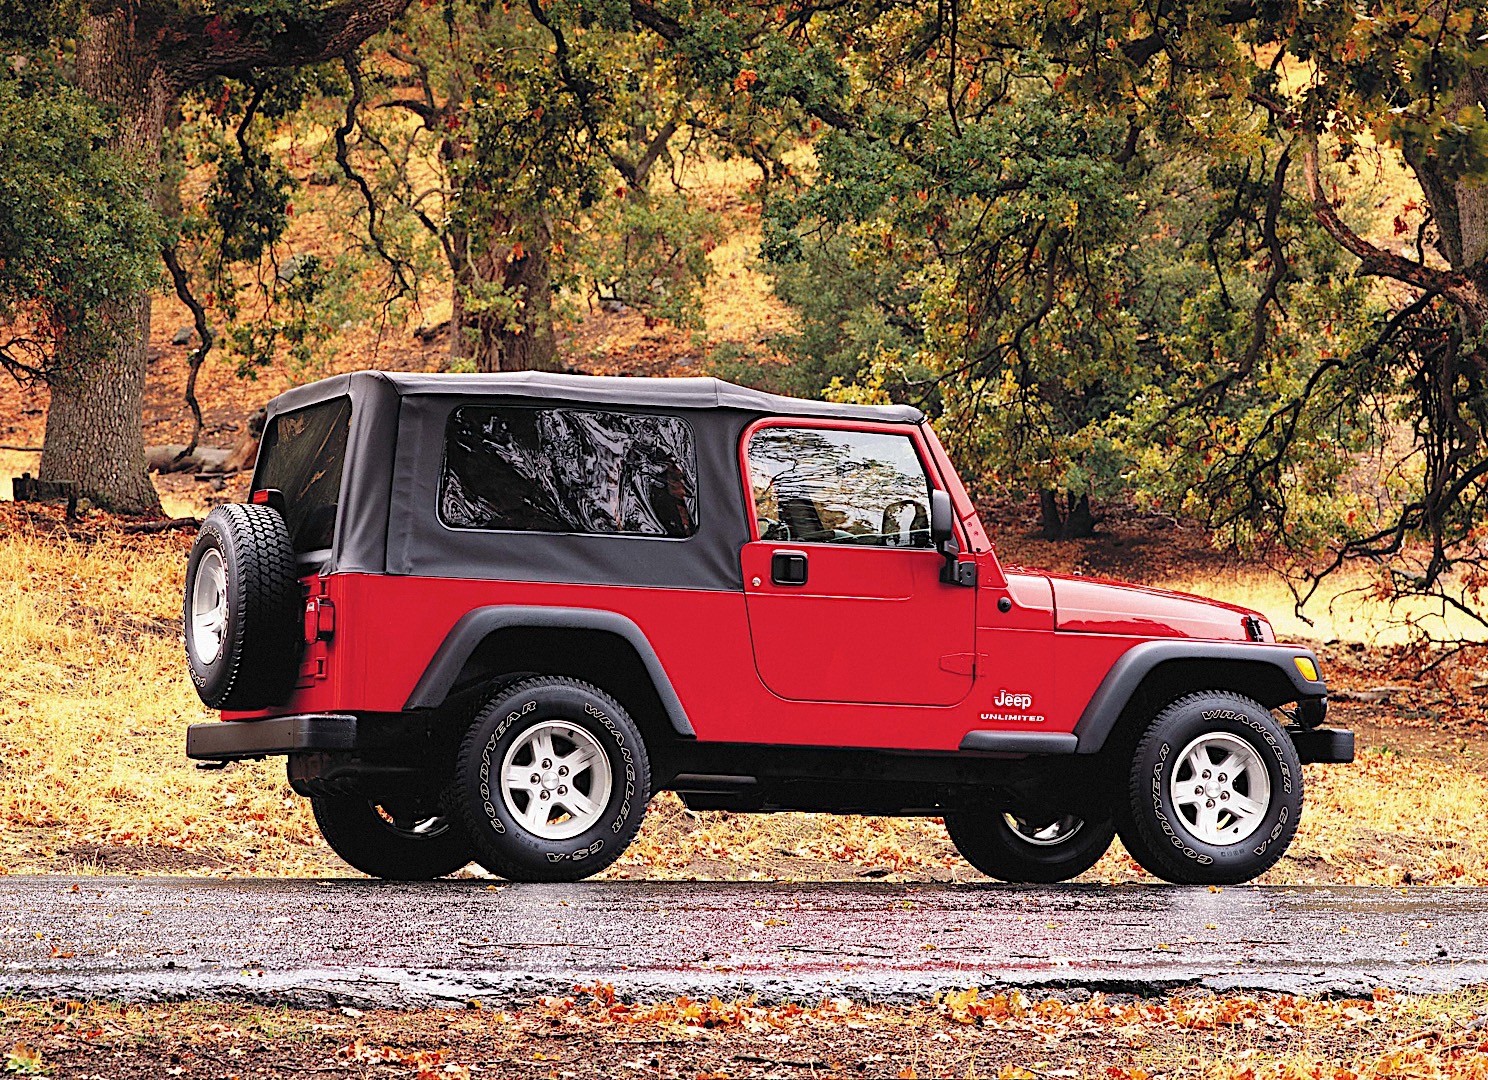 2005 Jeep Wrangler Unlimited Specs & Photos - autoevolution